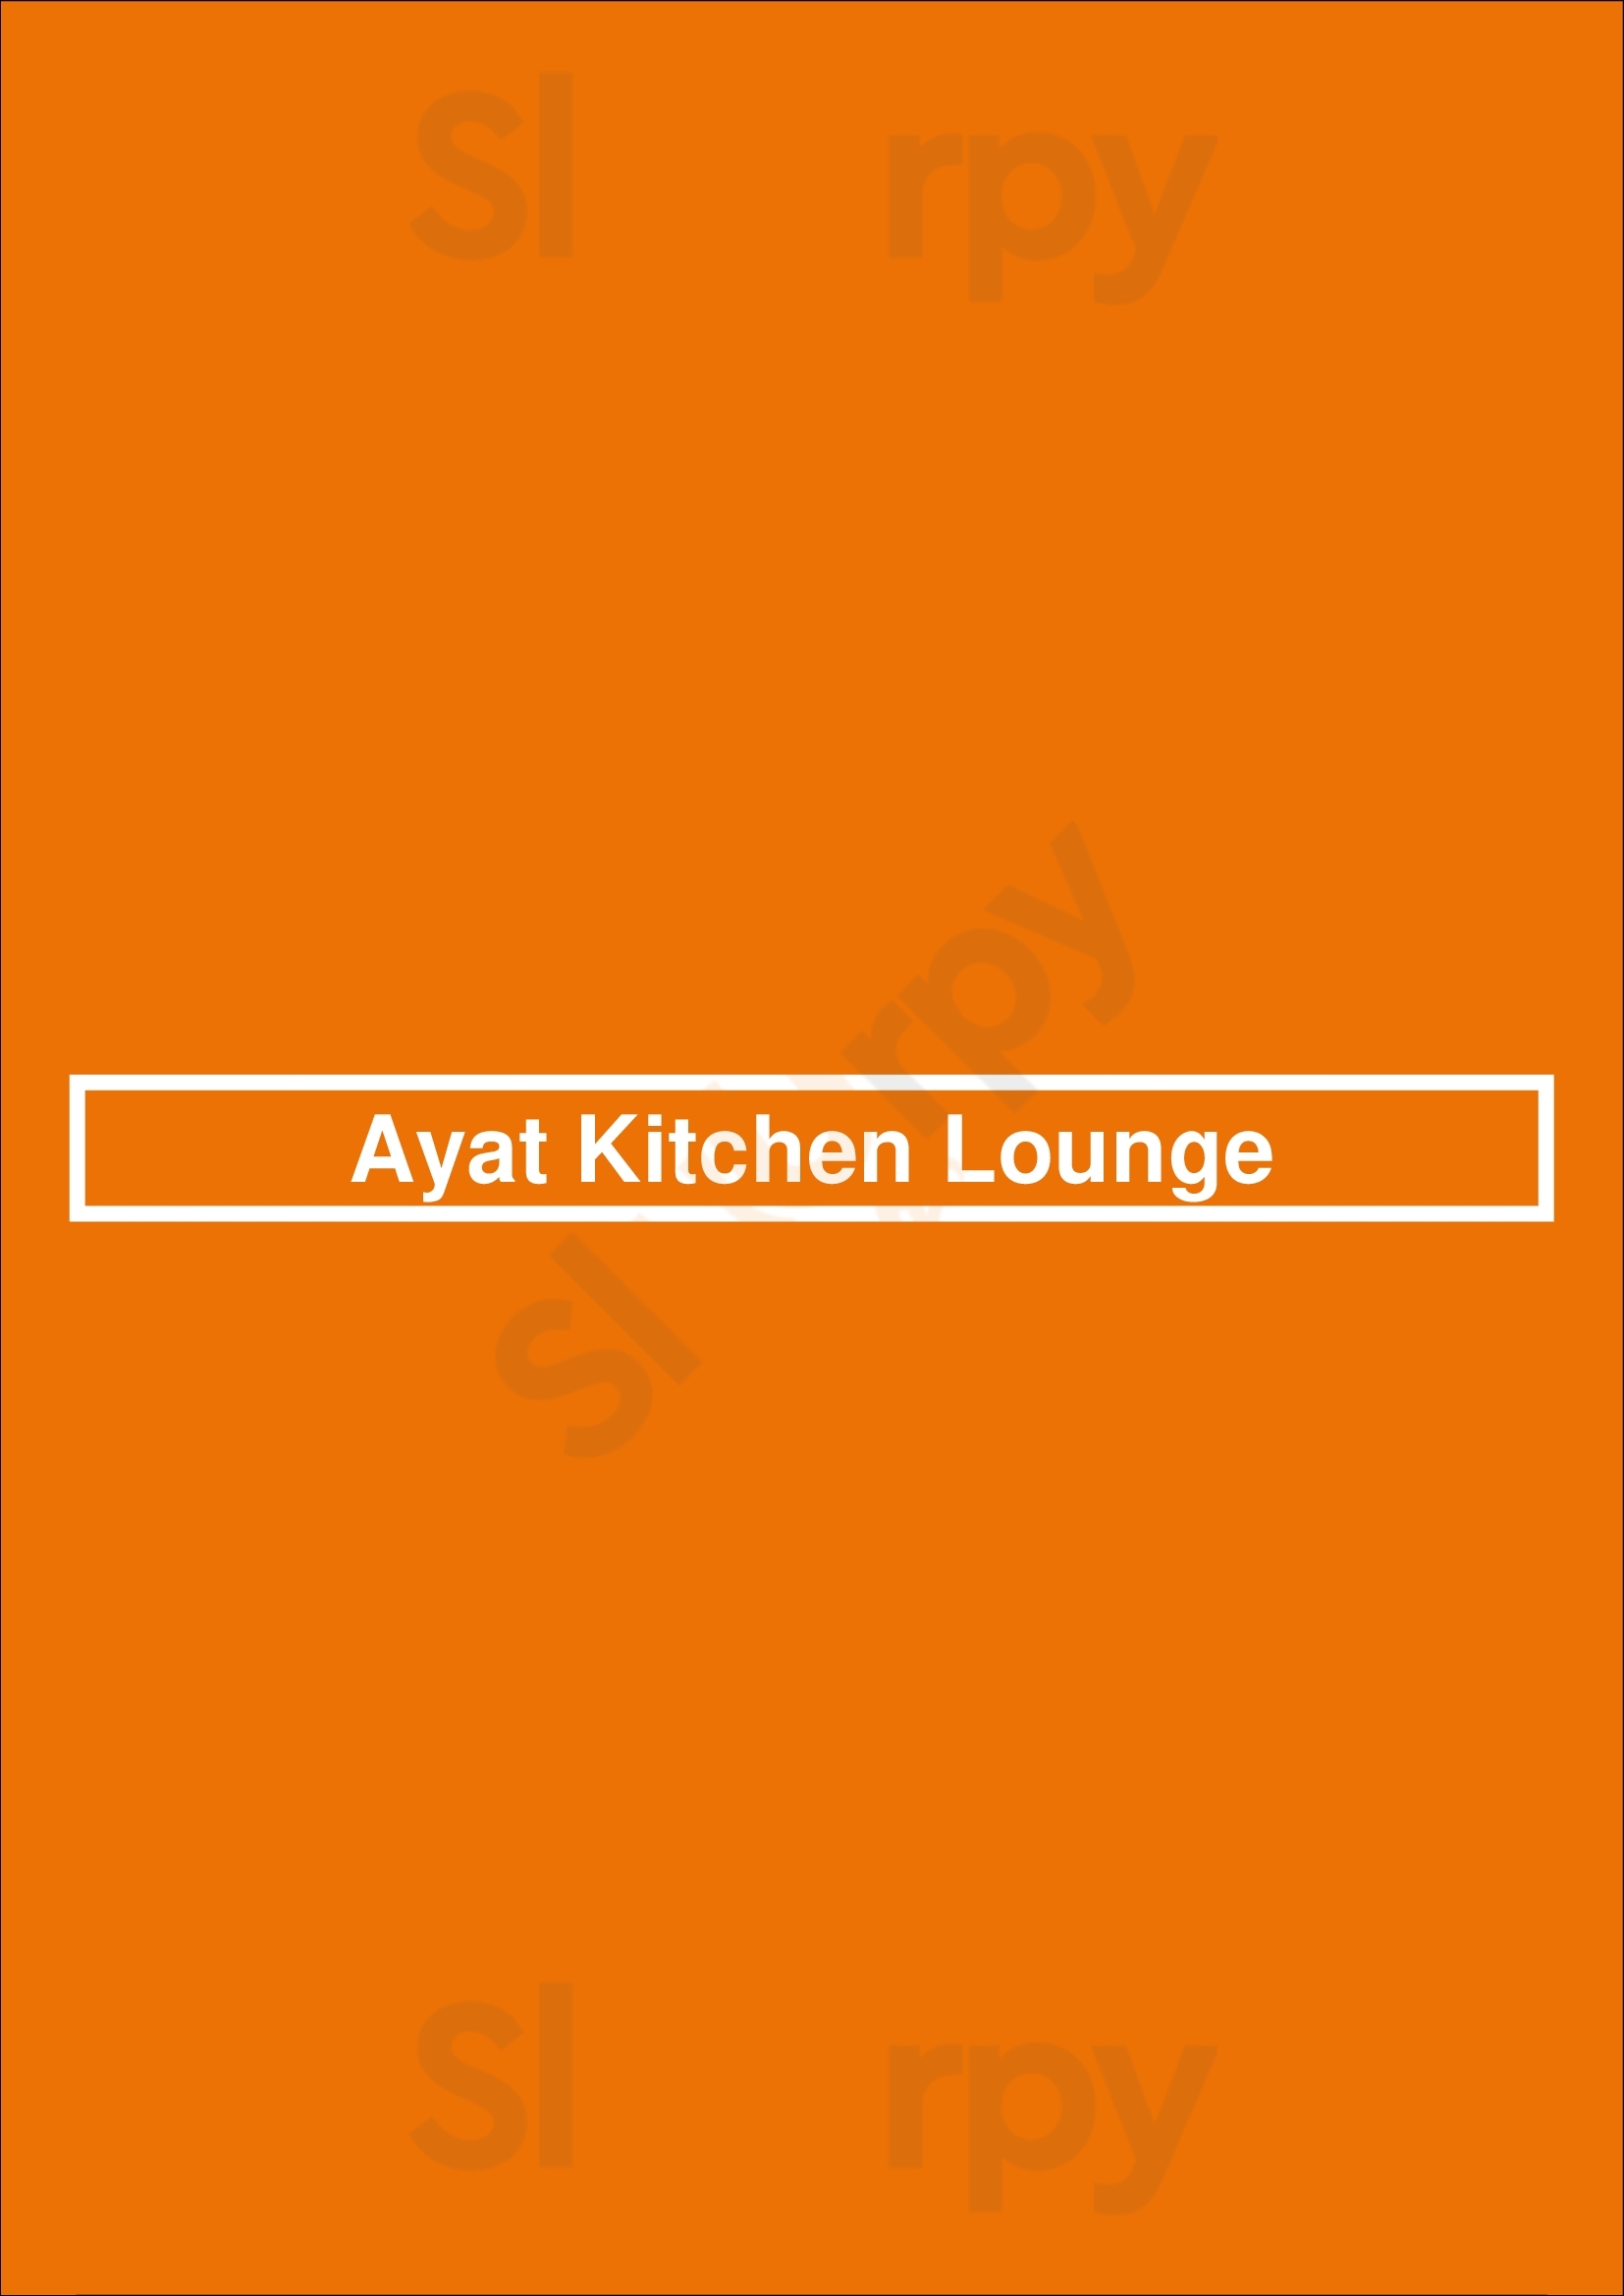 Ayat Kitchen Lounge Croydon Menu - 1